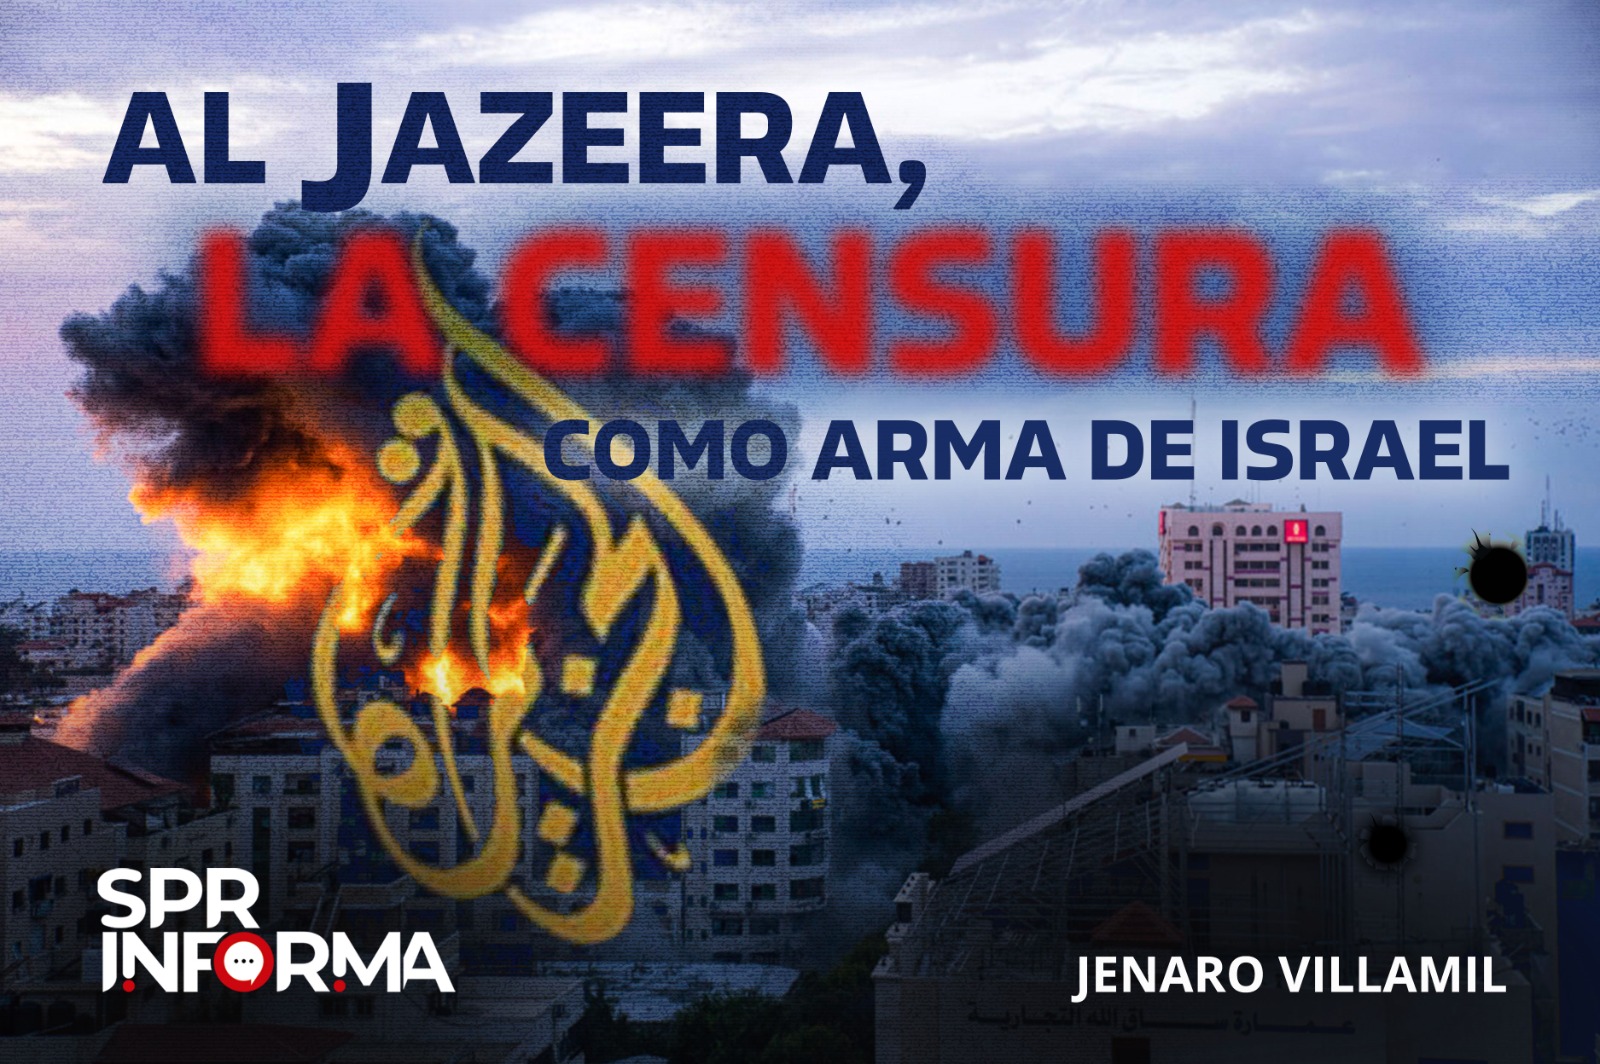 Al Jazeera, la Censura como Arma de Israel